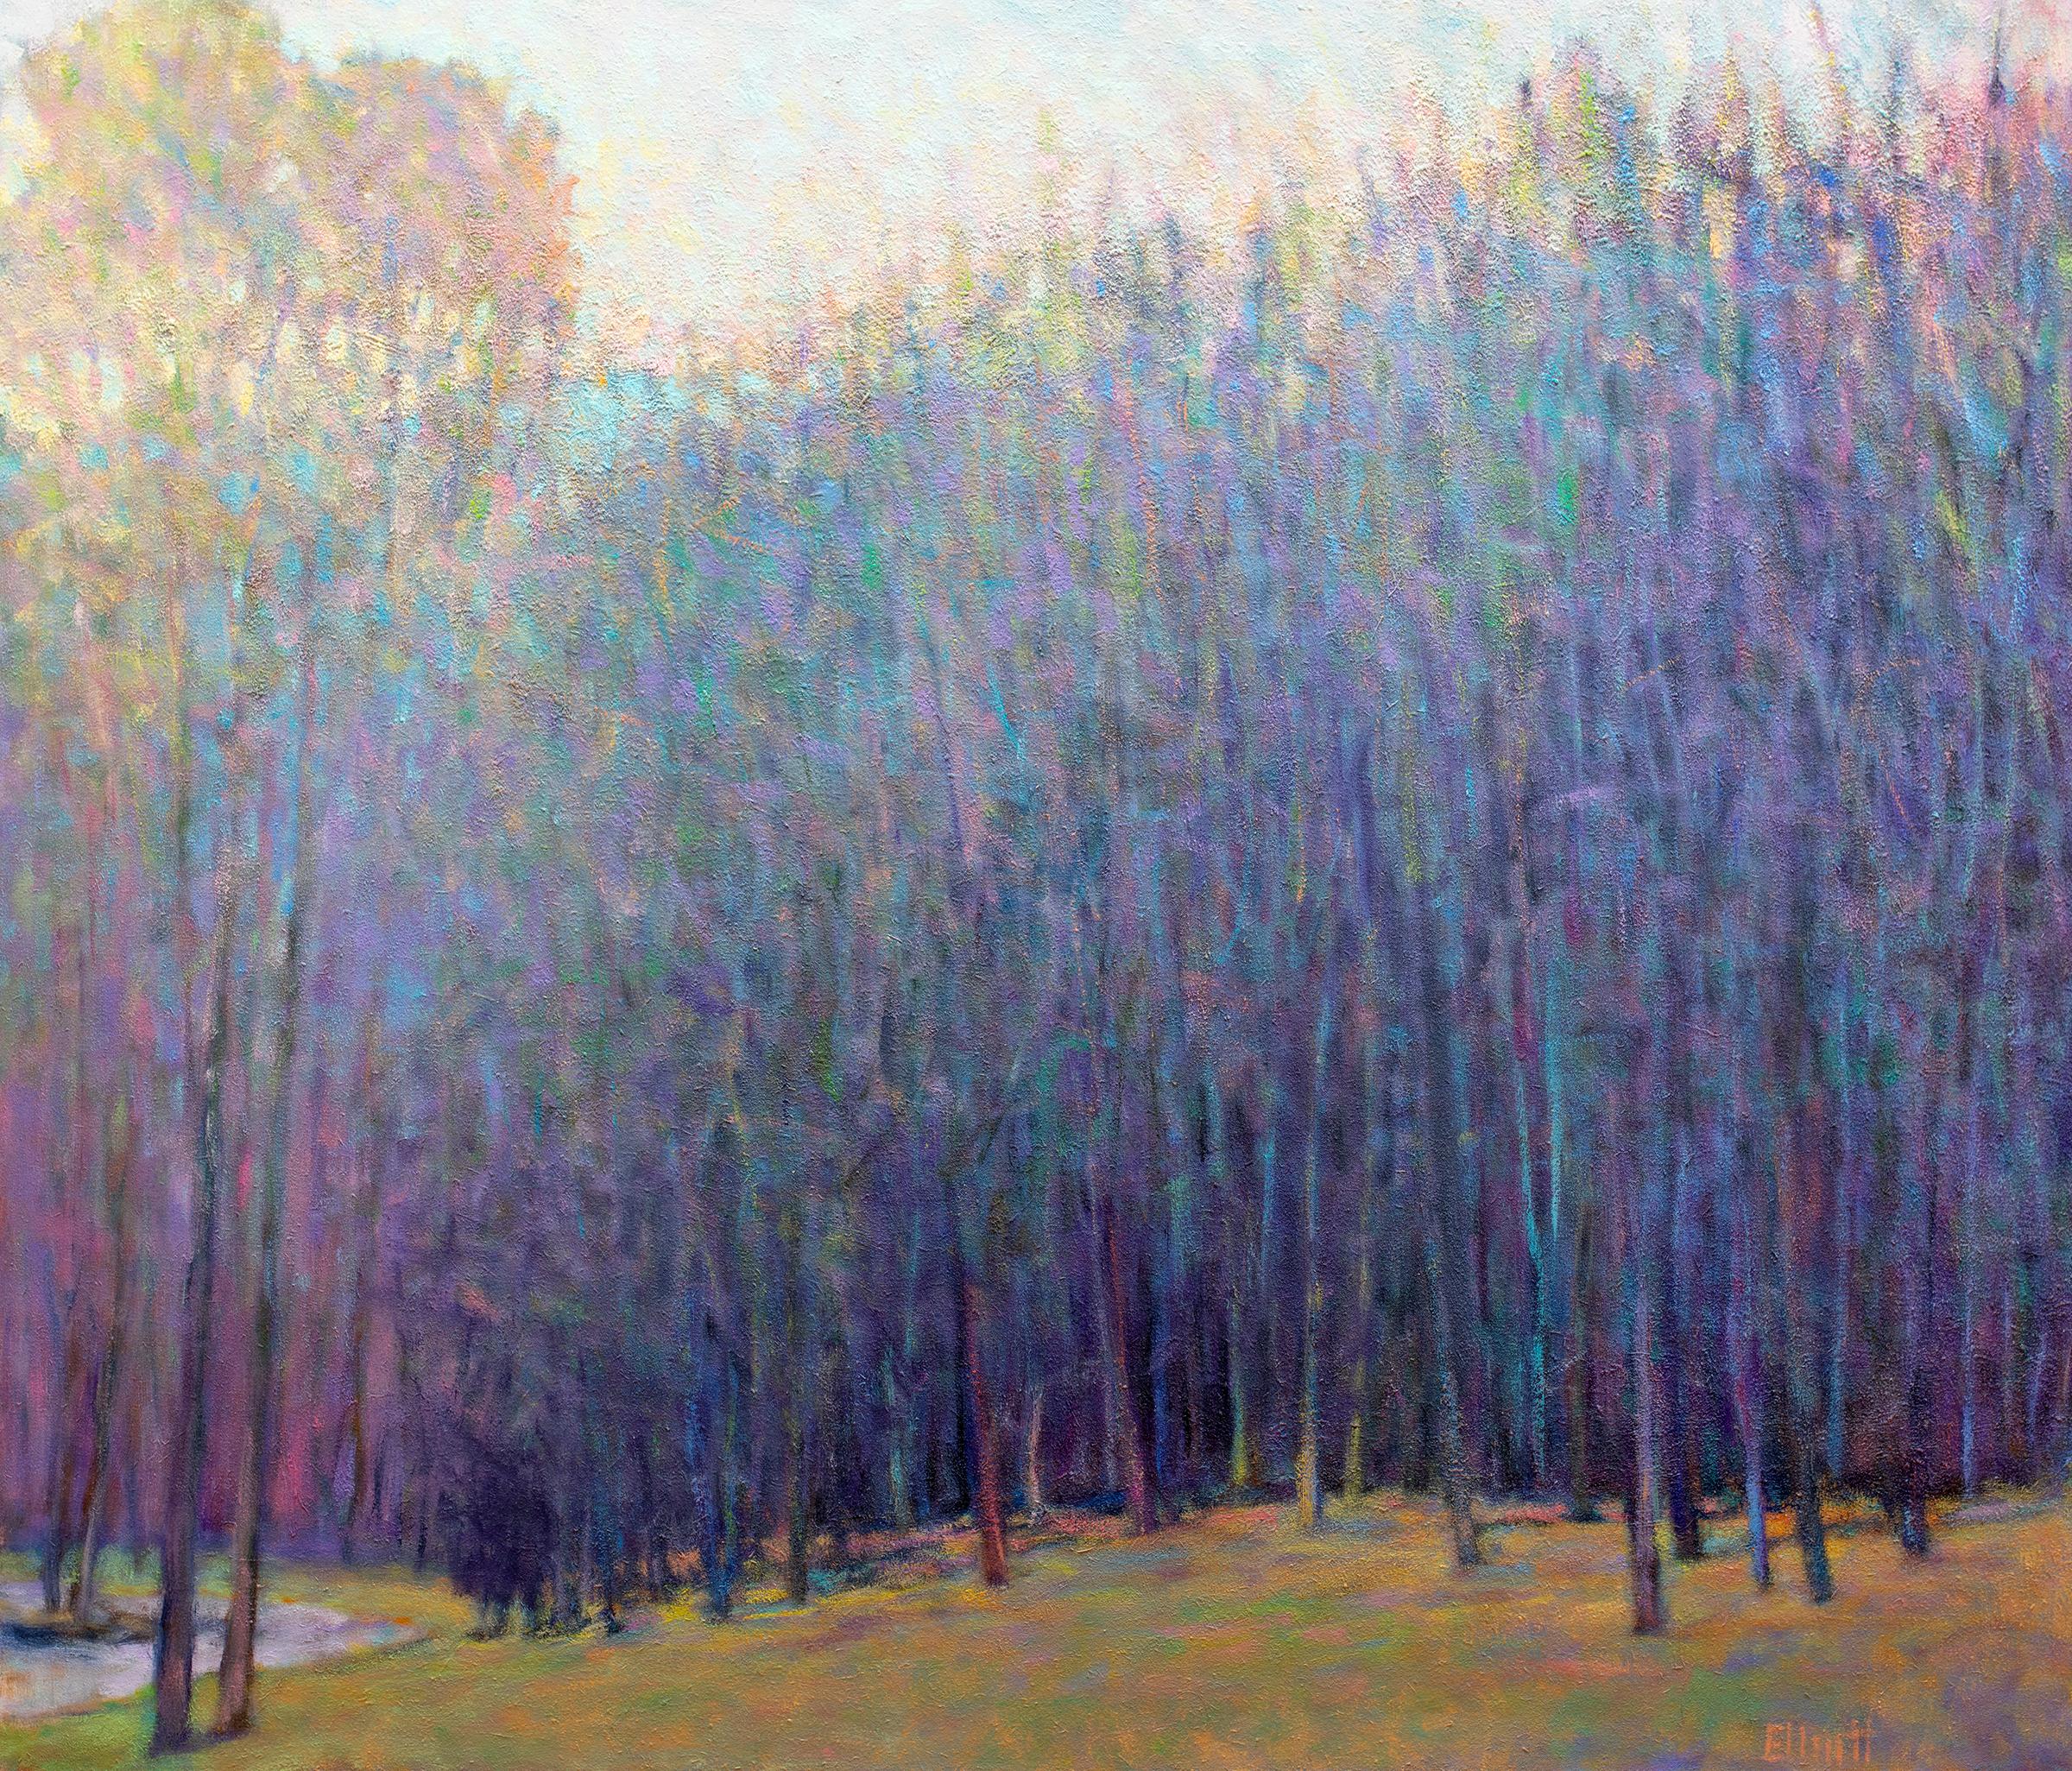 Ken Elliott Landscape Painting - 'At the Ponds Edge, Emerging Spring', Large Transitional Landscape Oil Painting